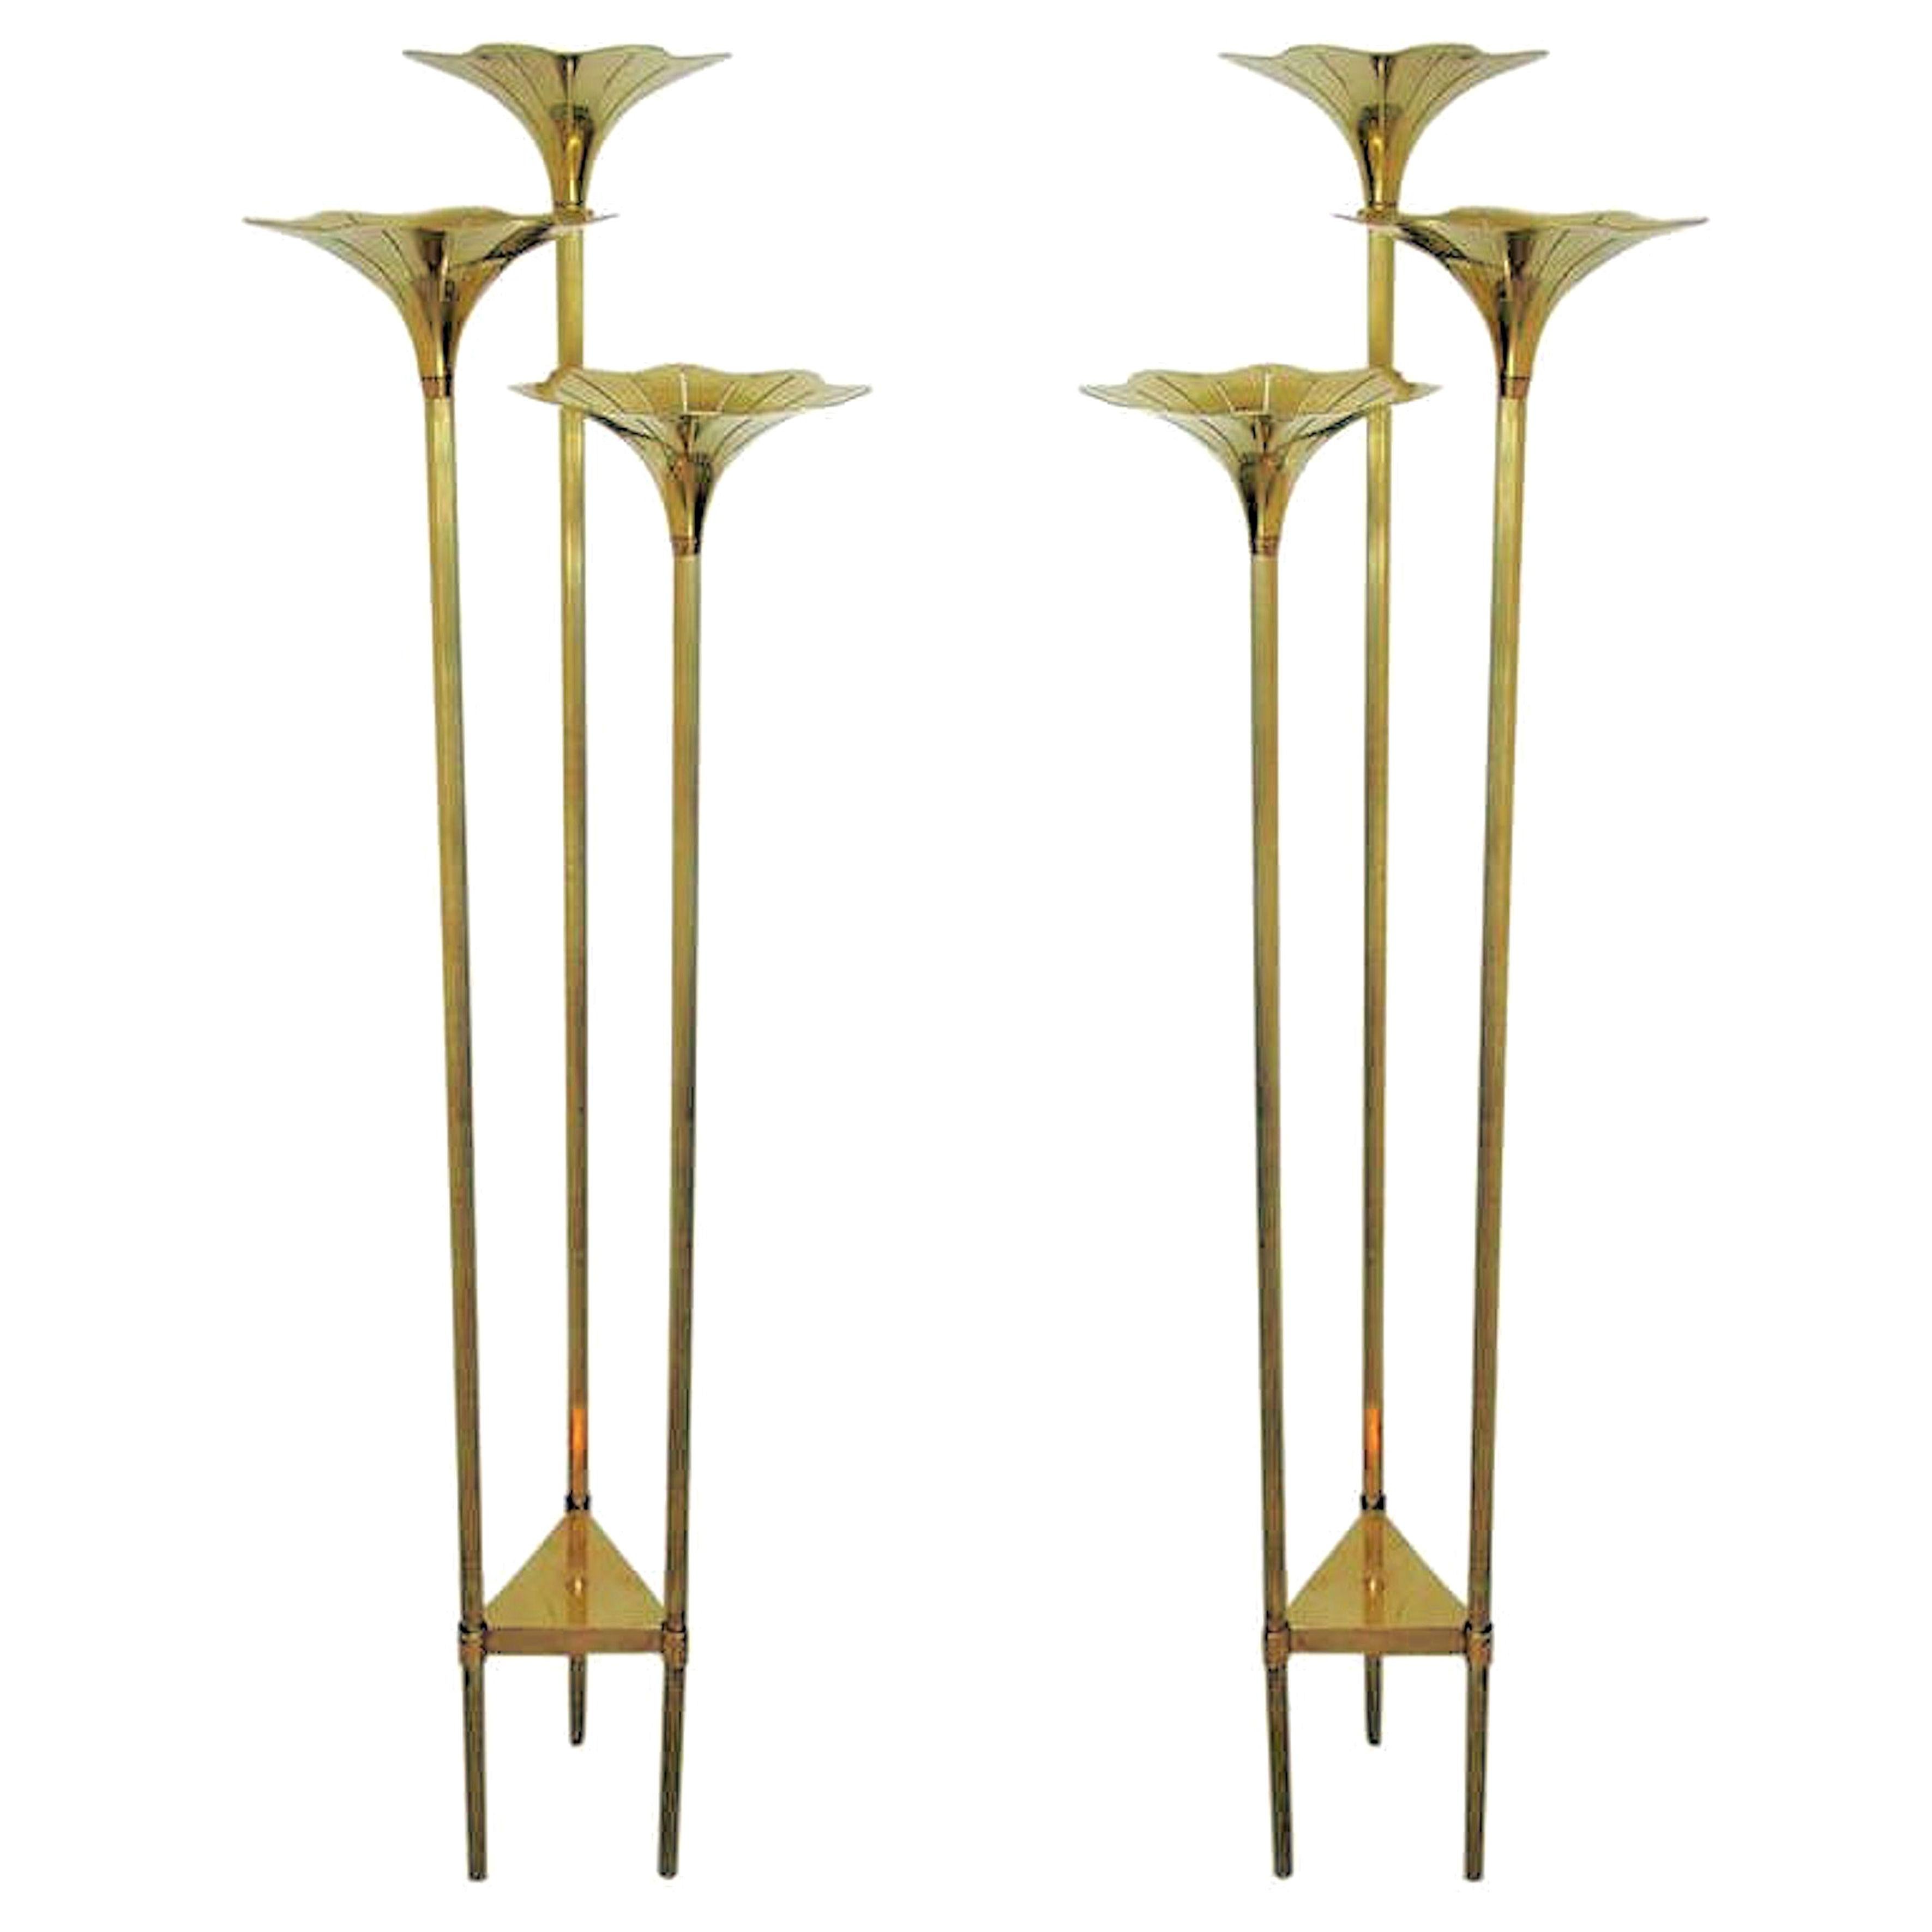 Pair of Mid-Century Modern Brass Floor Lamps, Gabriella Crespi Style